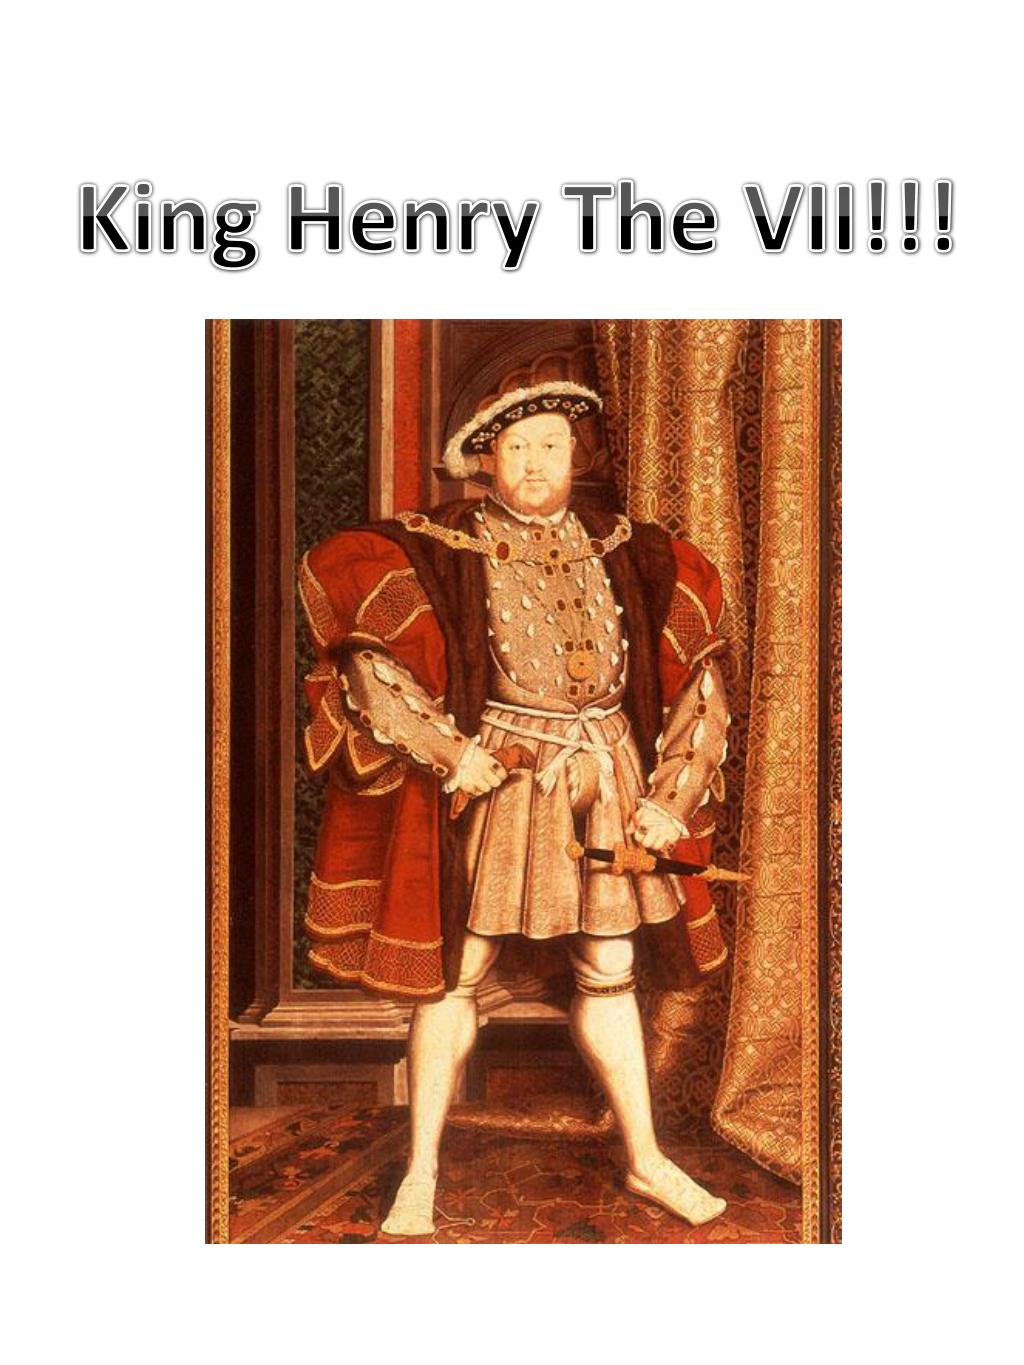 Speech On King Henry Viii